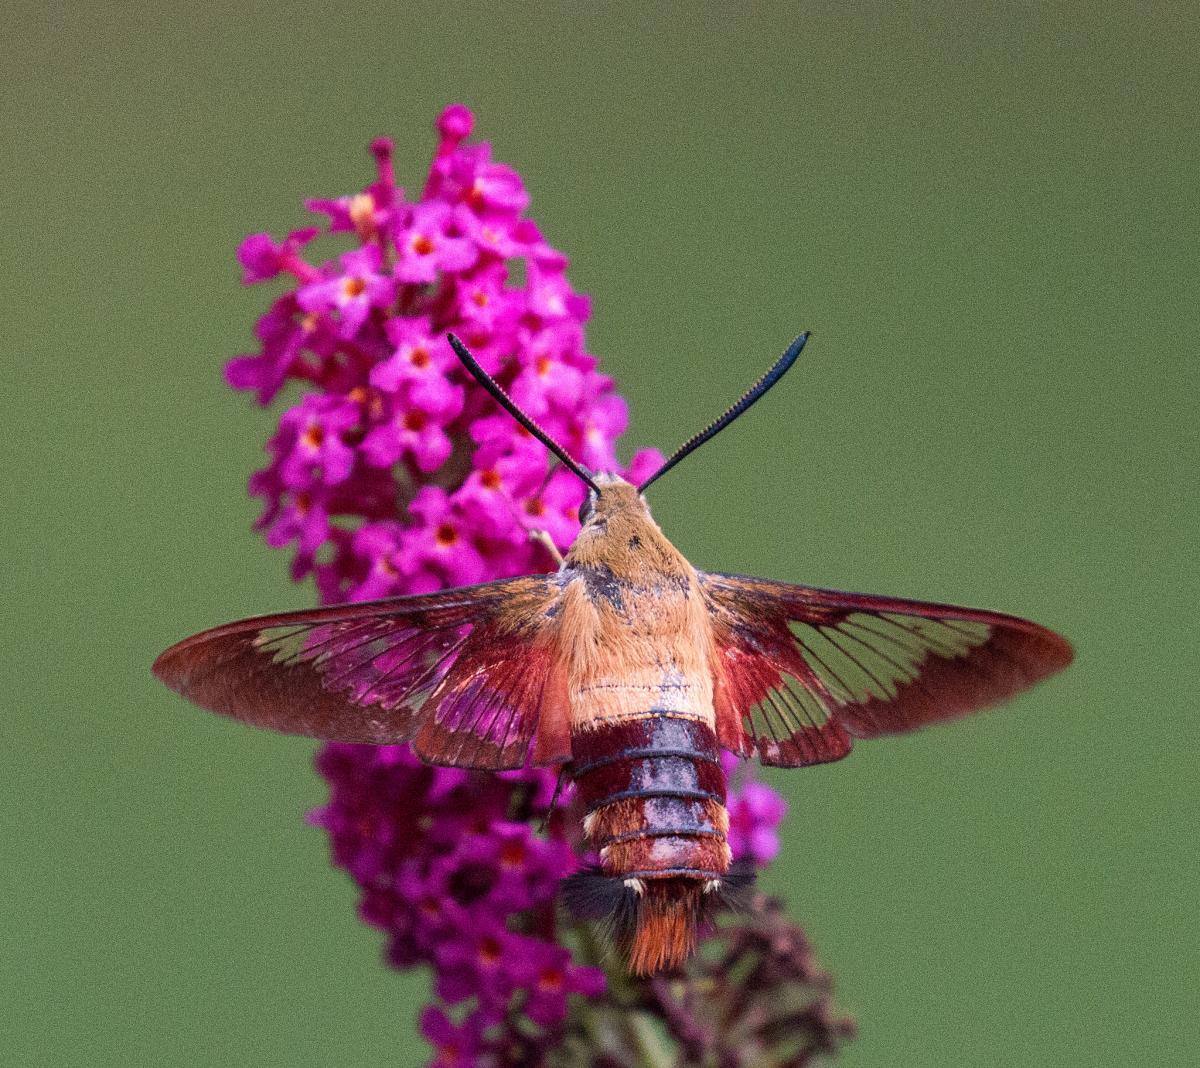 Hummingbird moth pollinating long-necked flower